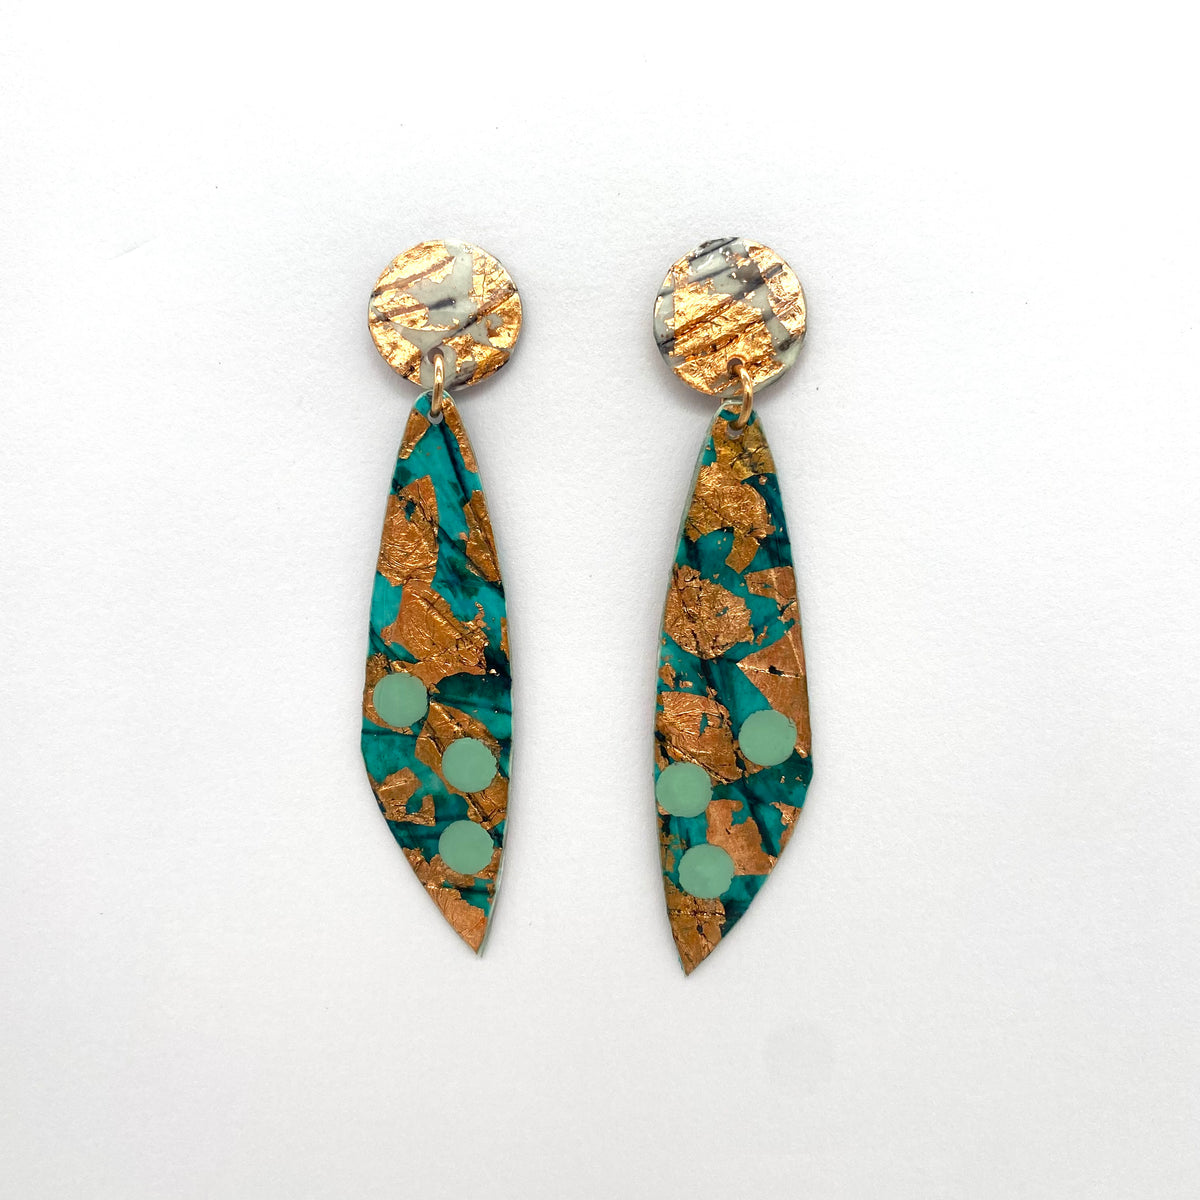 Moondrifter sgraffito textile earrings in sea-green/rose-gold